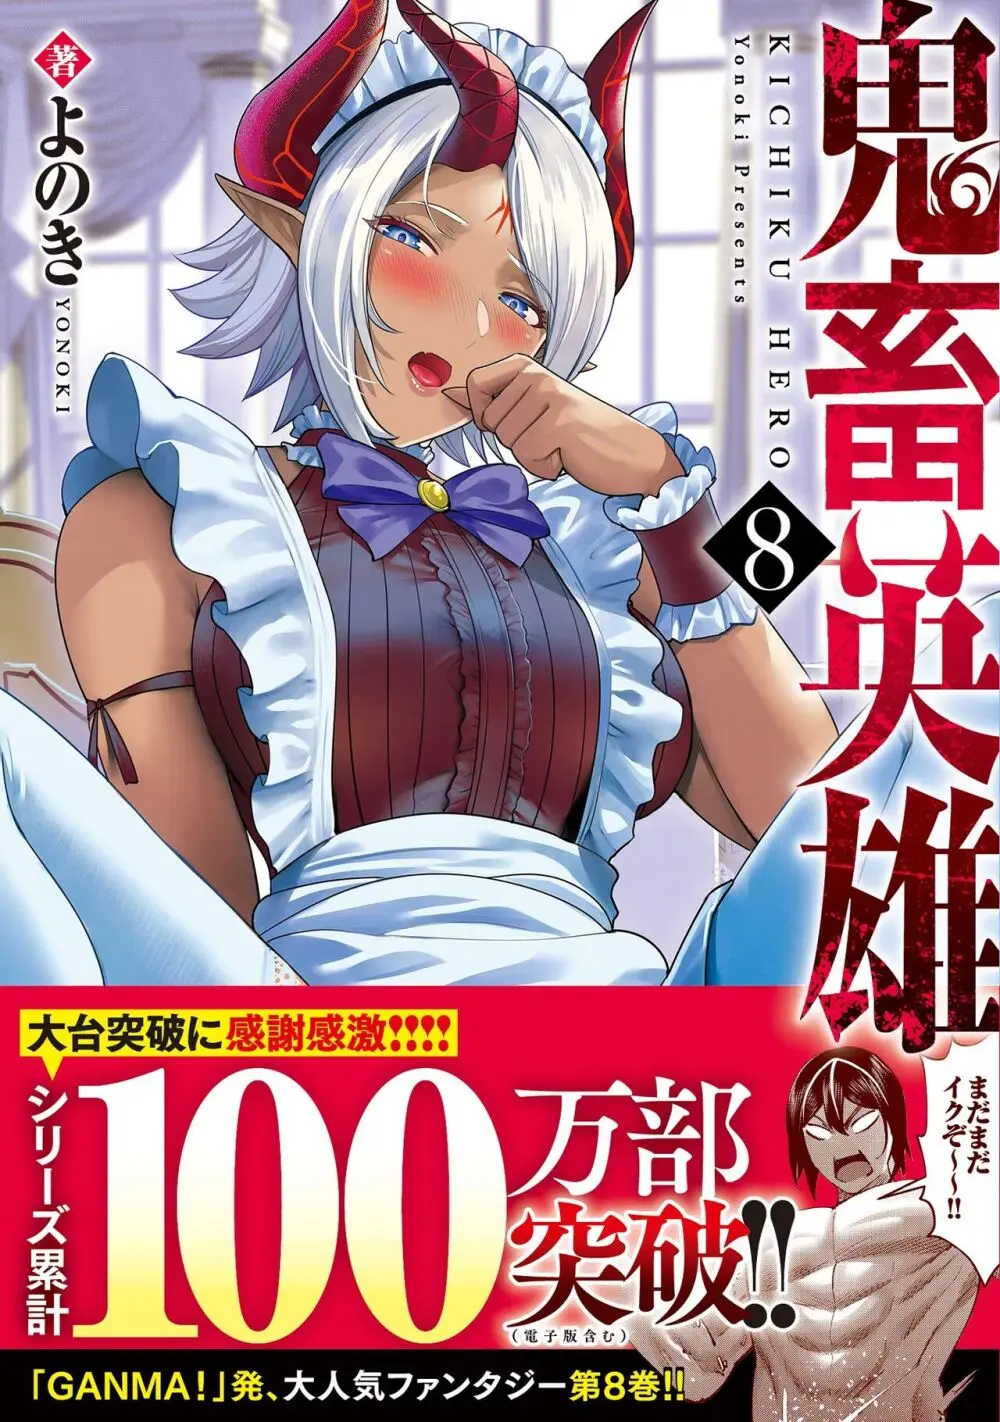 鬼畜英雄 Vol.08 - 商業誌 - エロ漫画 - Hentai - Manga - Raw